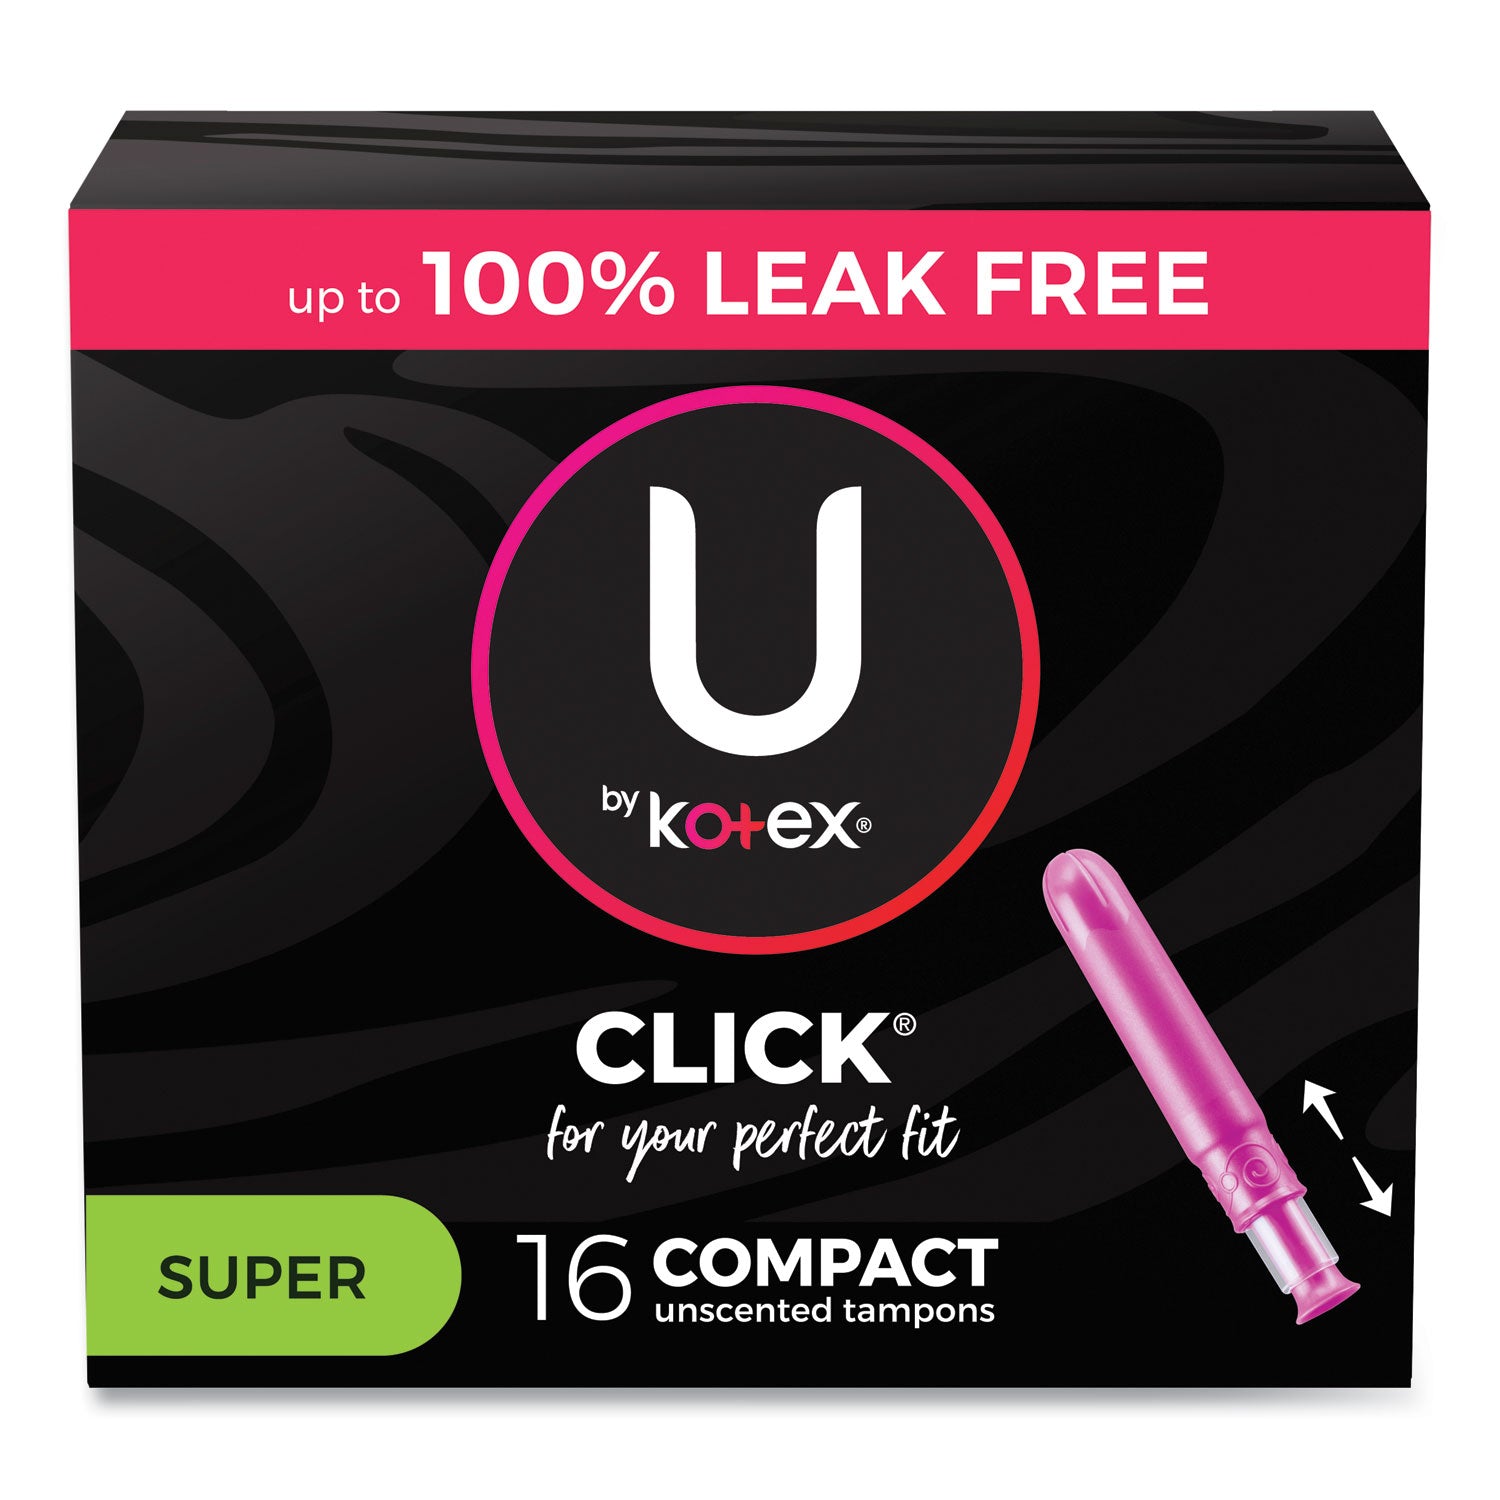 u-by-kotex-click-compact-tampons-super-absorbency-16-pack-8-packs-carton_kcc51581 - 1